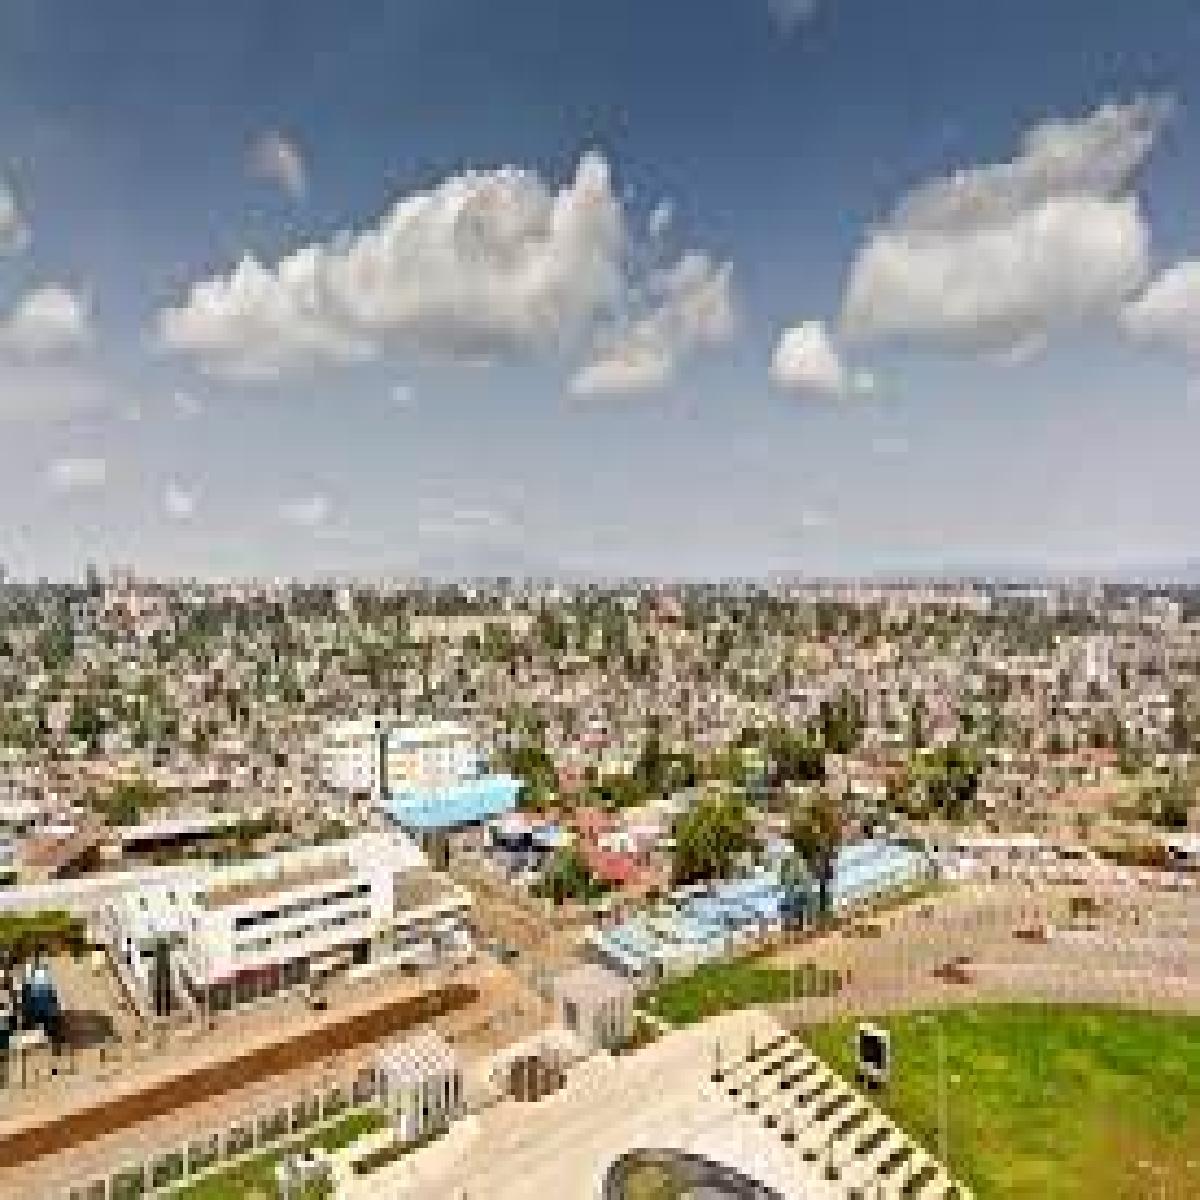 Andersen Global Broadens Footprint in Ethiopia with Tax Firm HIMA